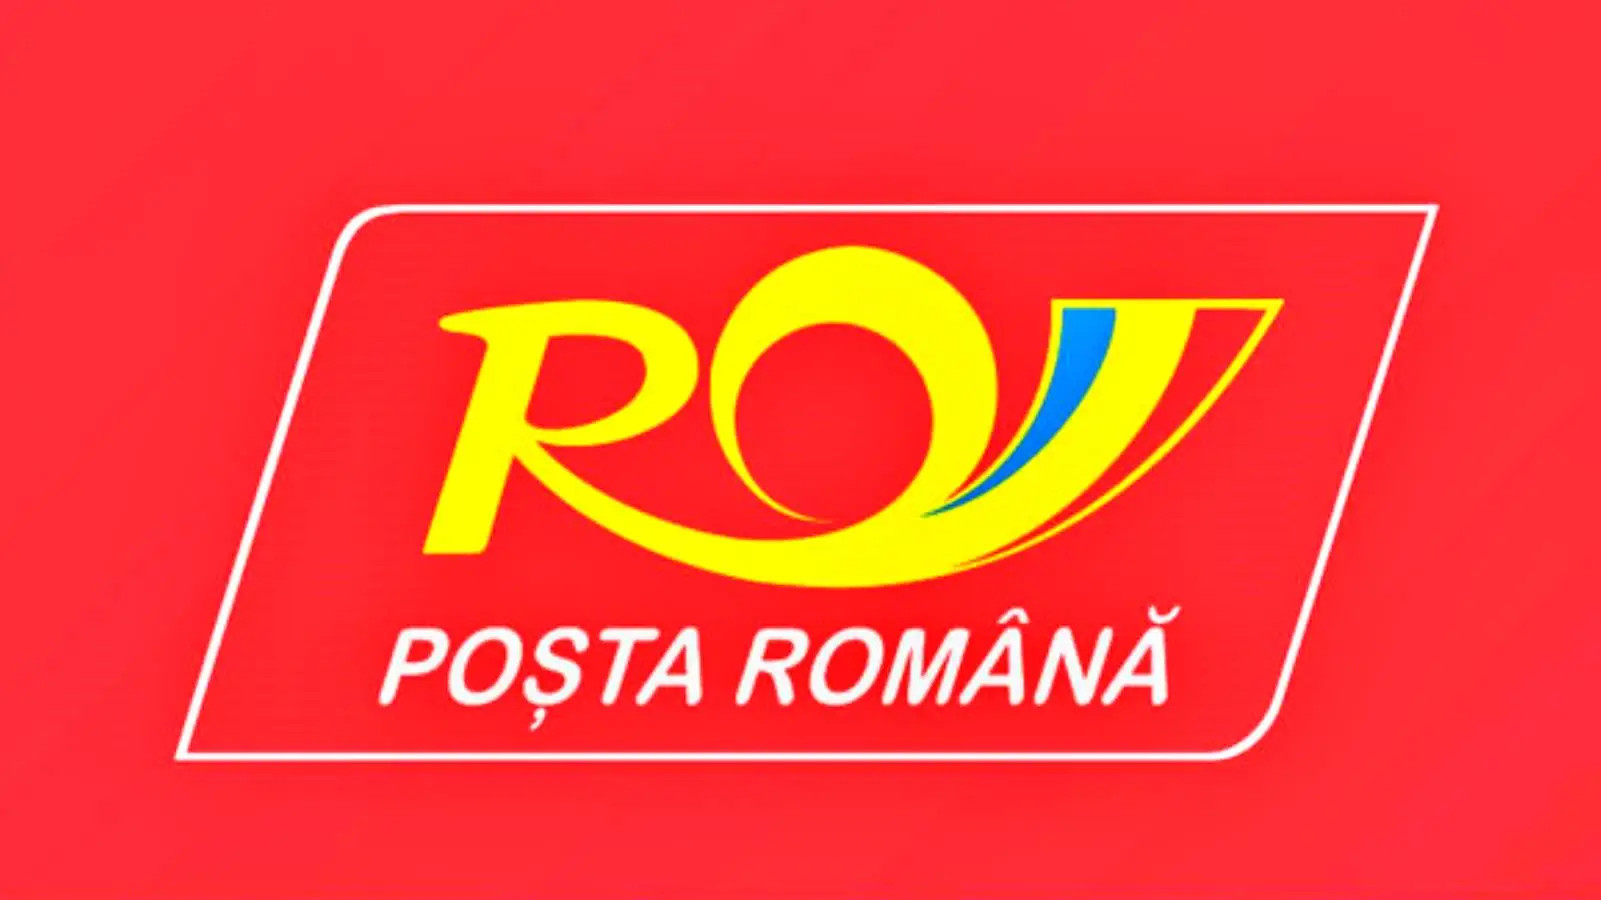 Anuncio IMPORTANTE Medida Postal Rumana Luat Romani